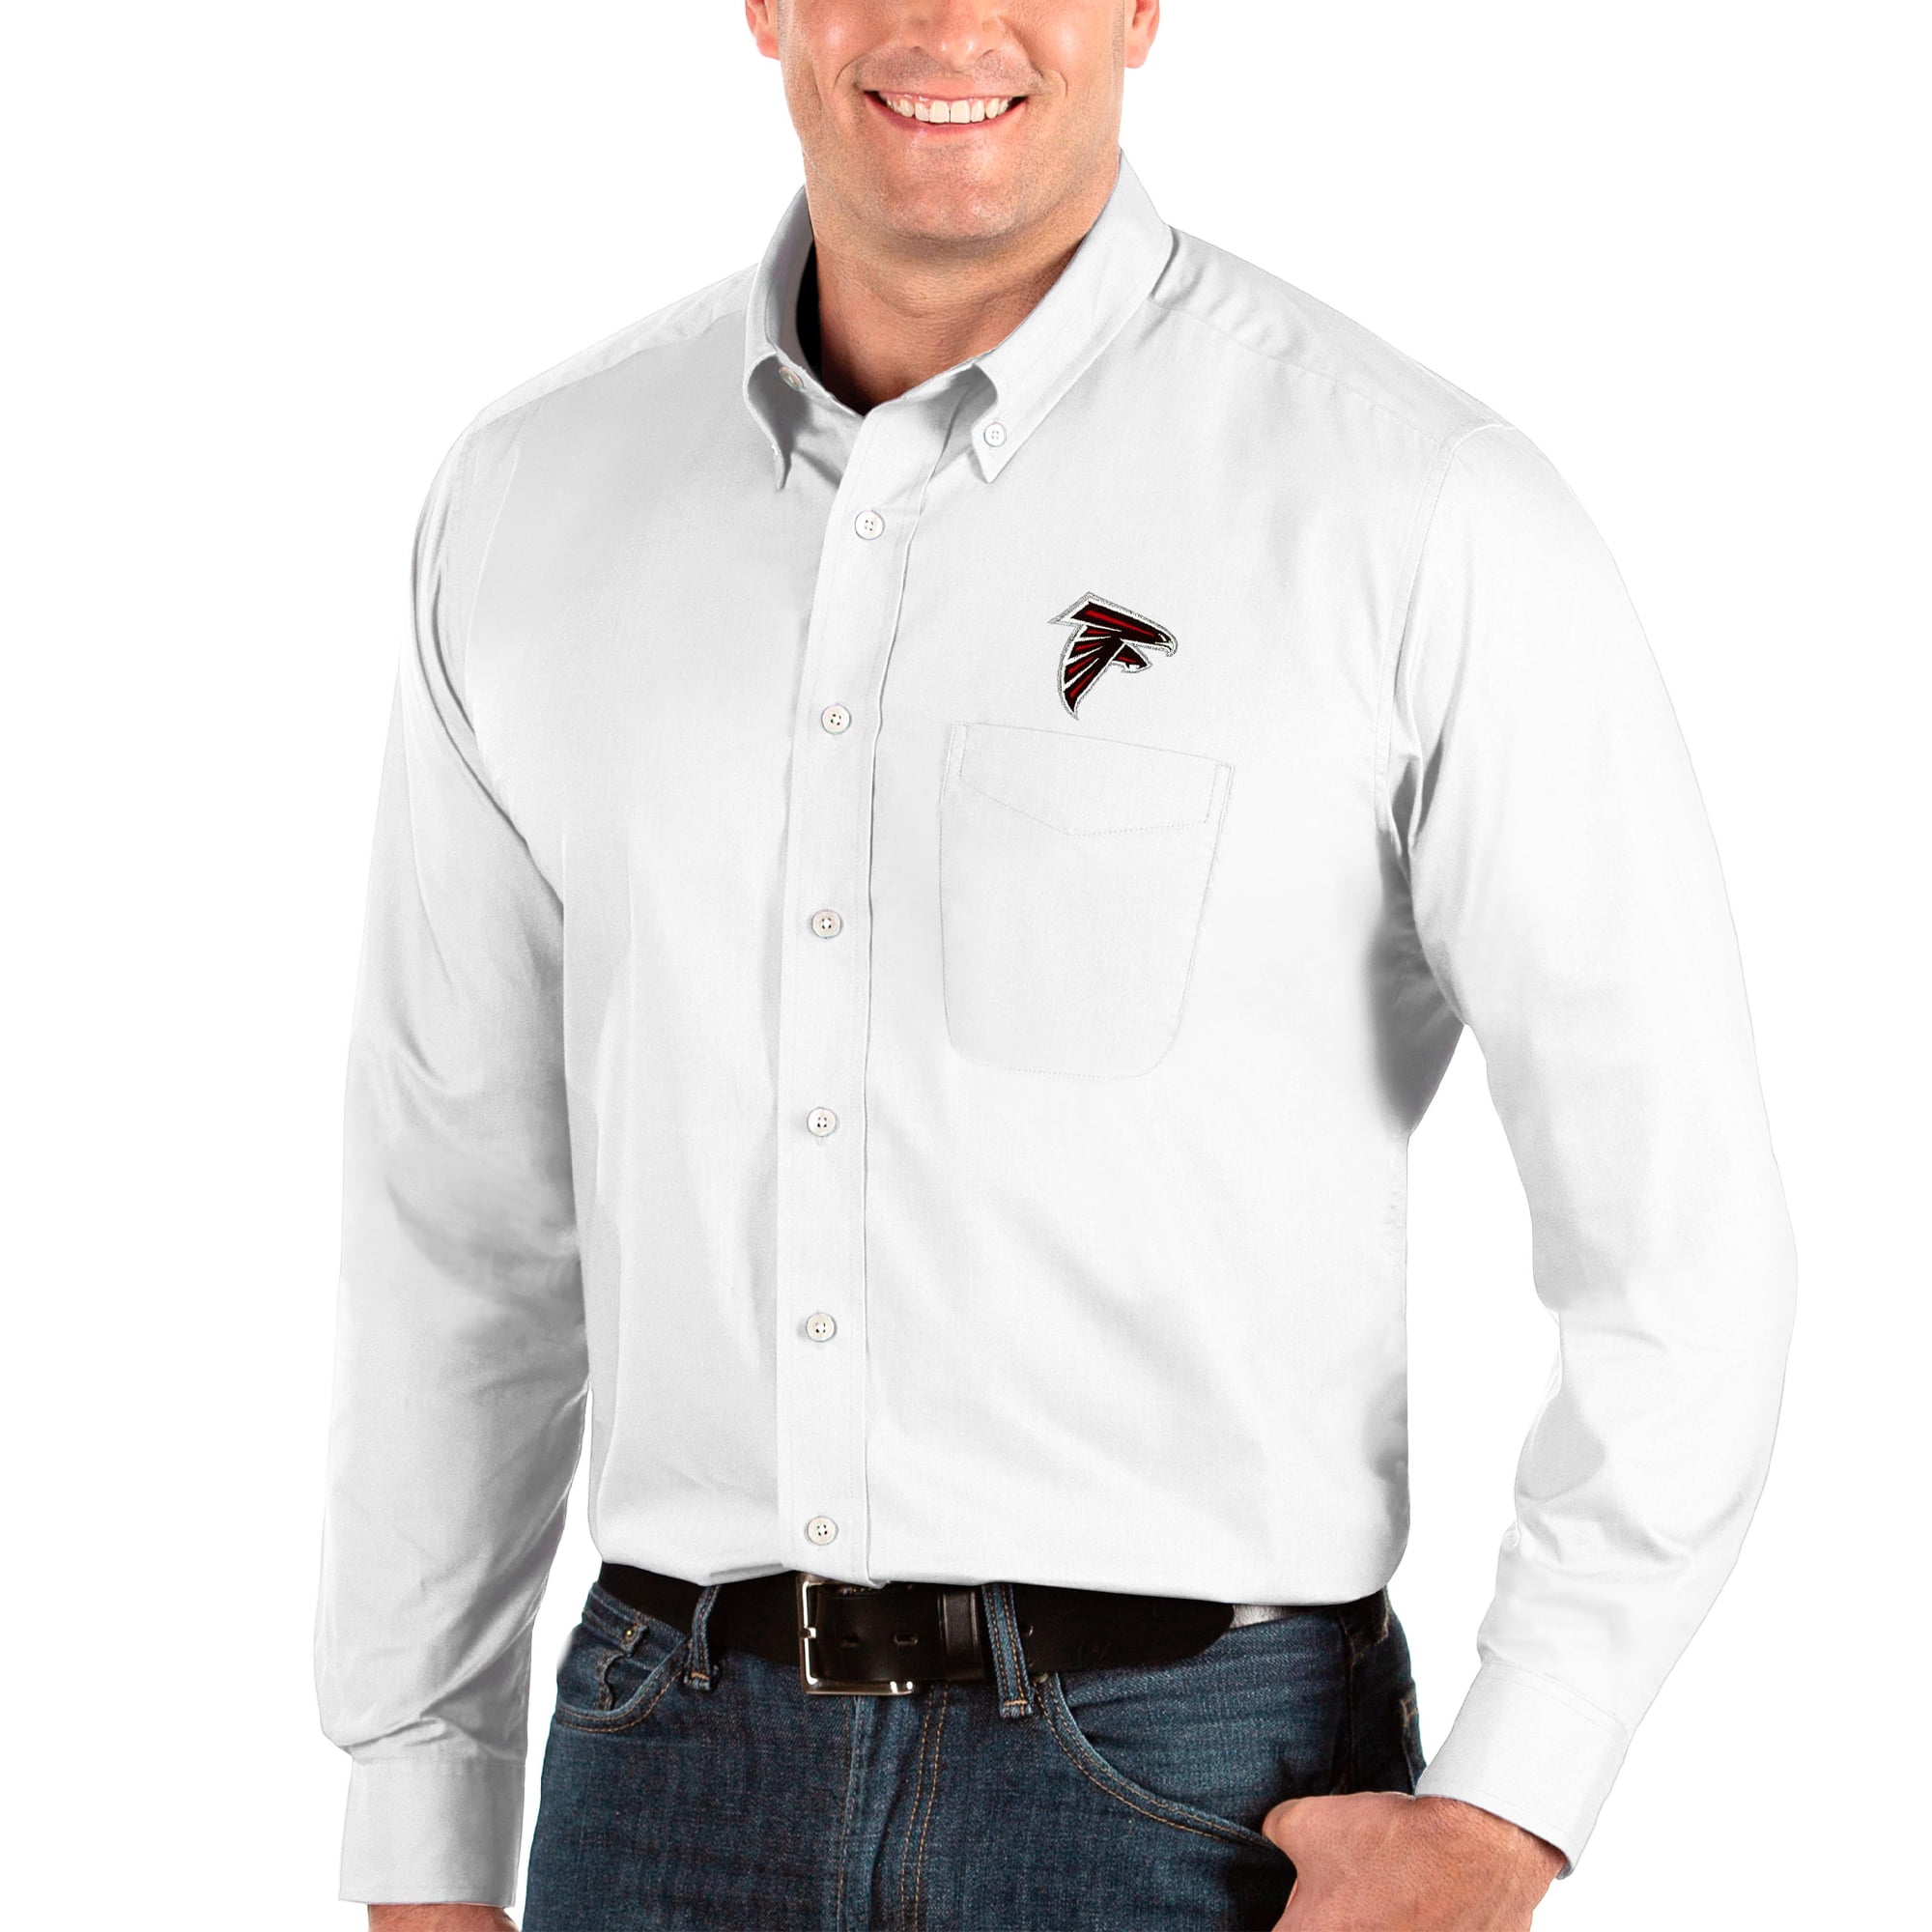 falcons dress shirt